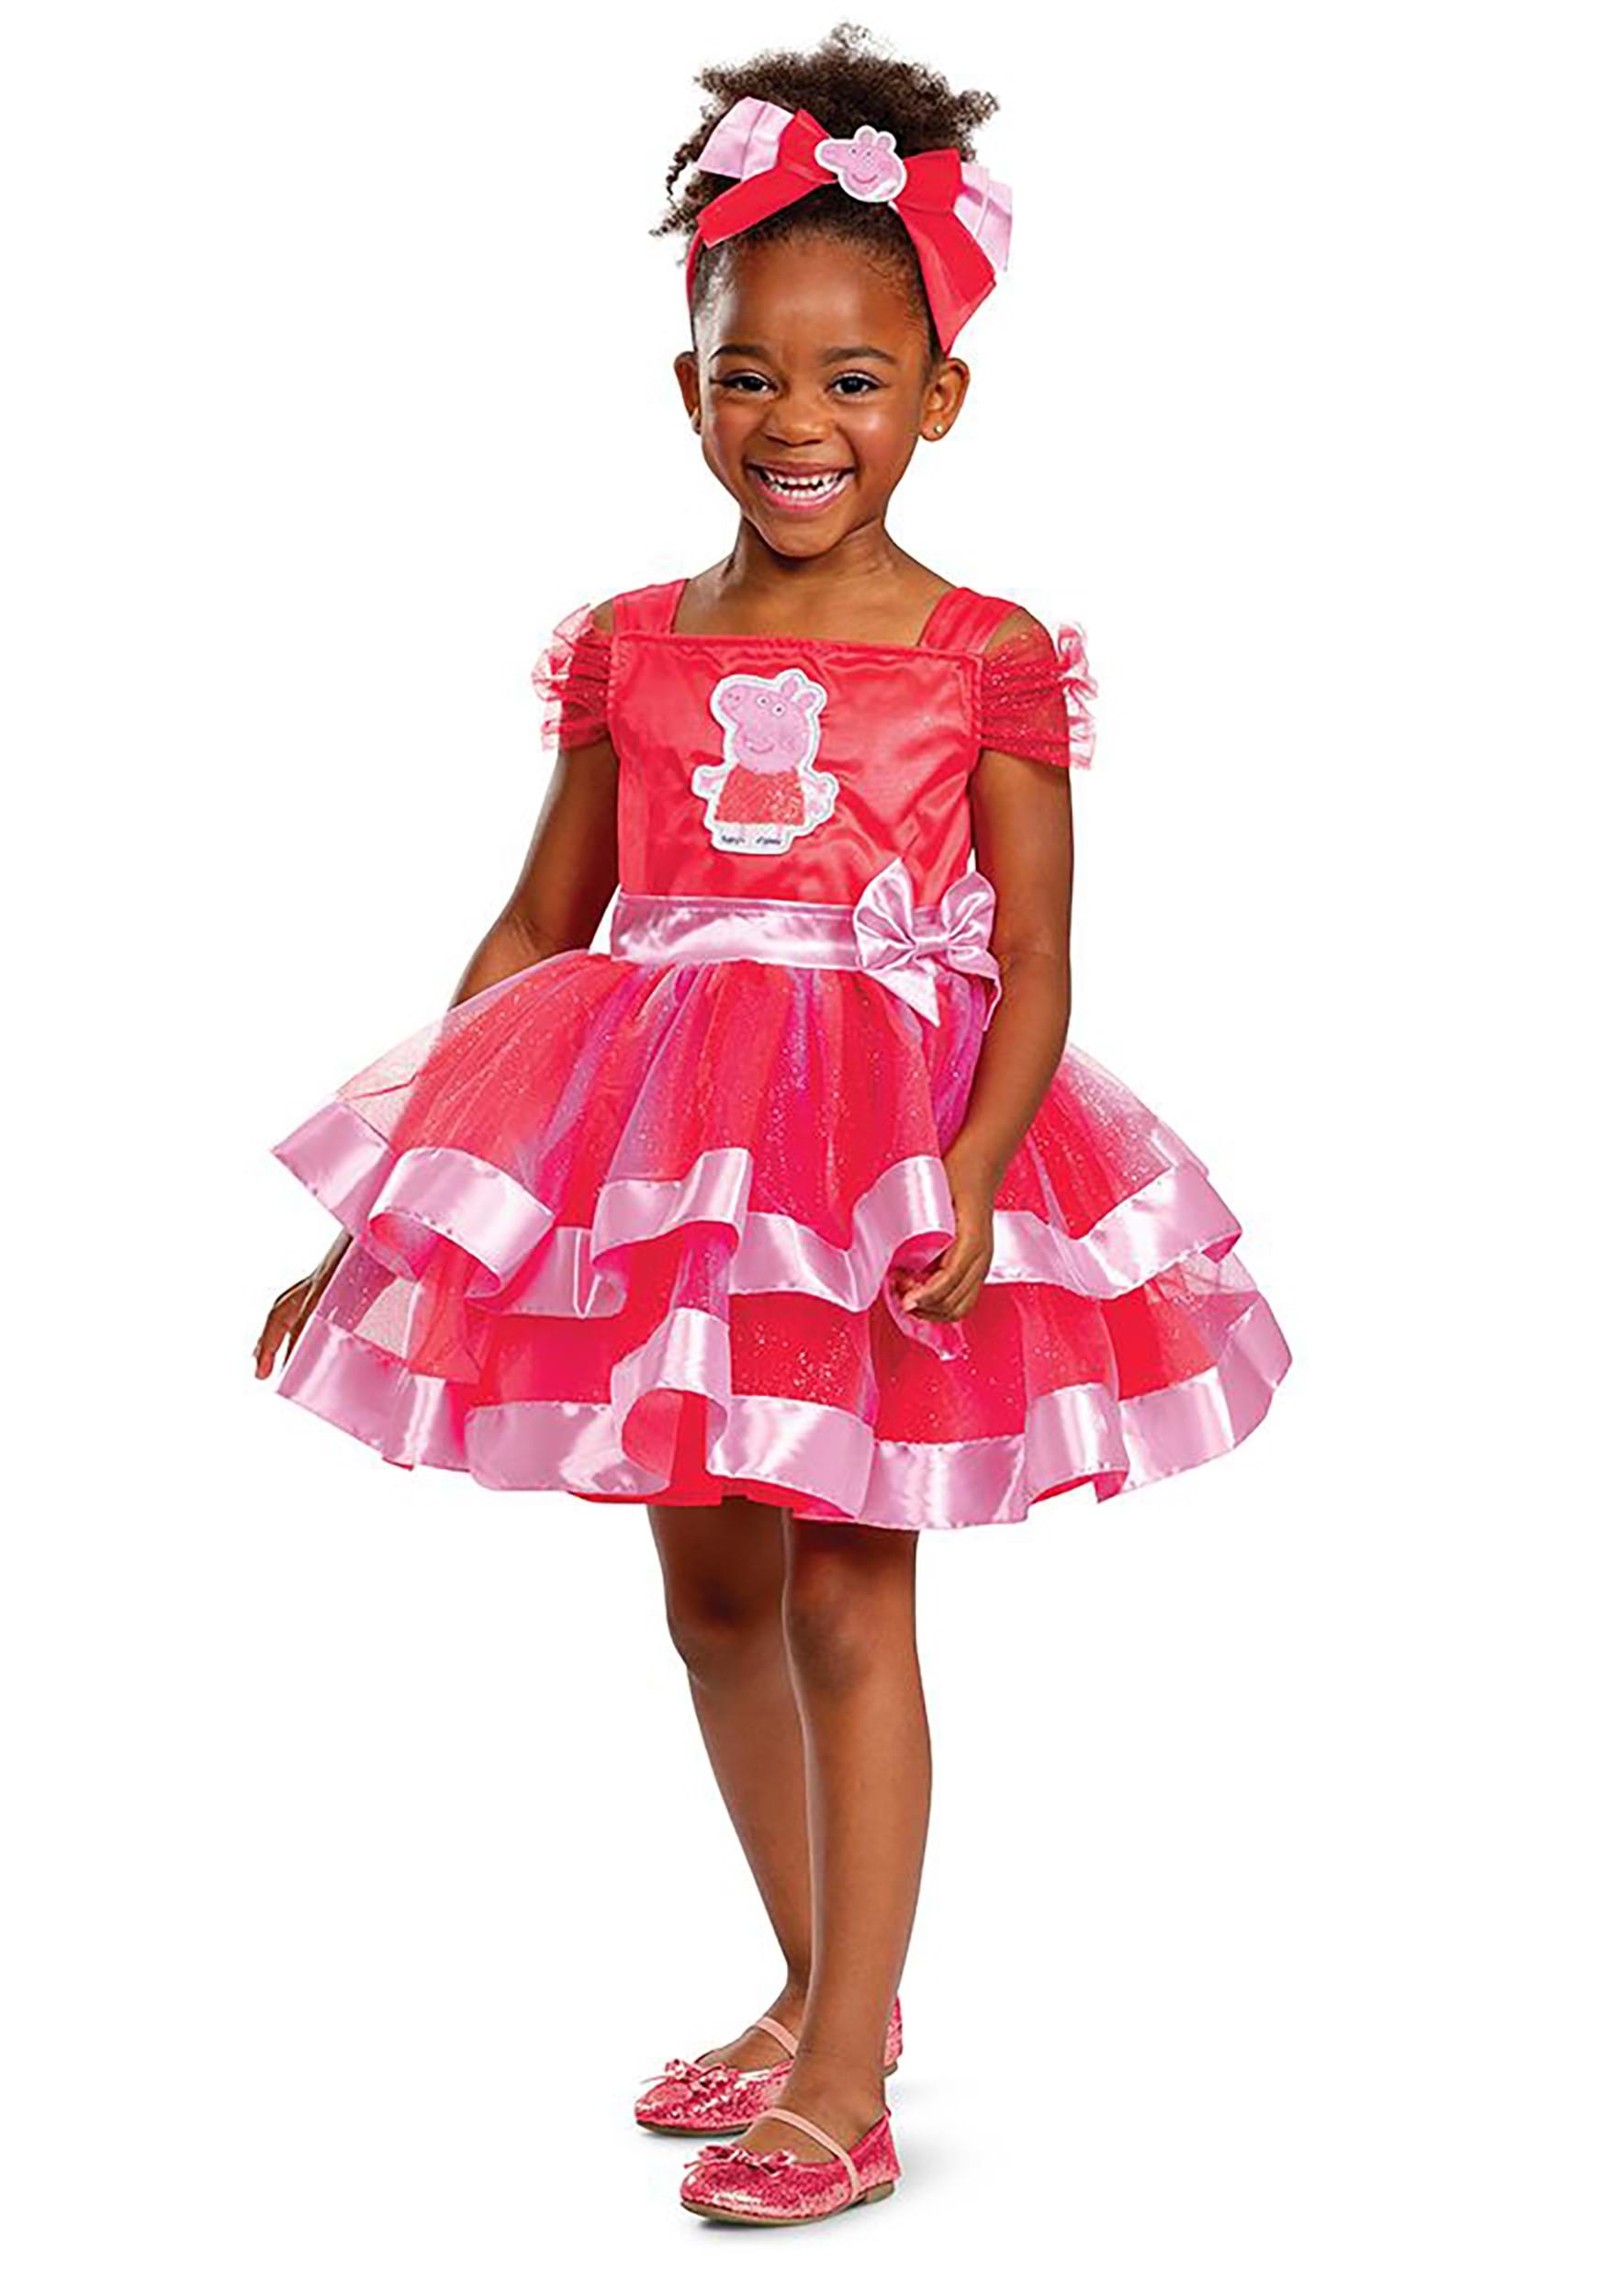 Photos - Fancy Dress Peppa Disguise  Pig Tutu Toddler Costume Pink/Red DI120849 